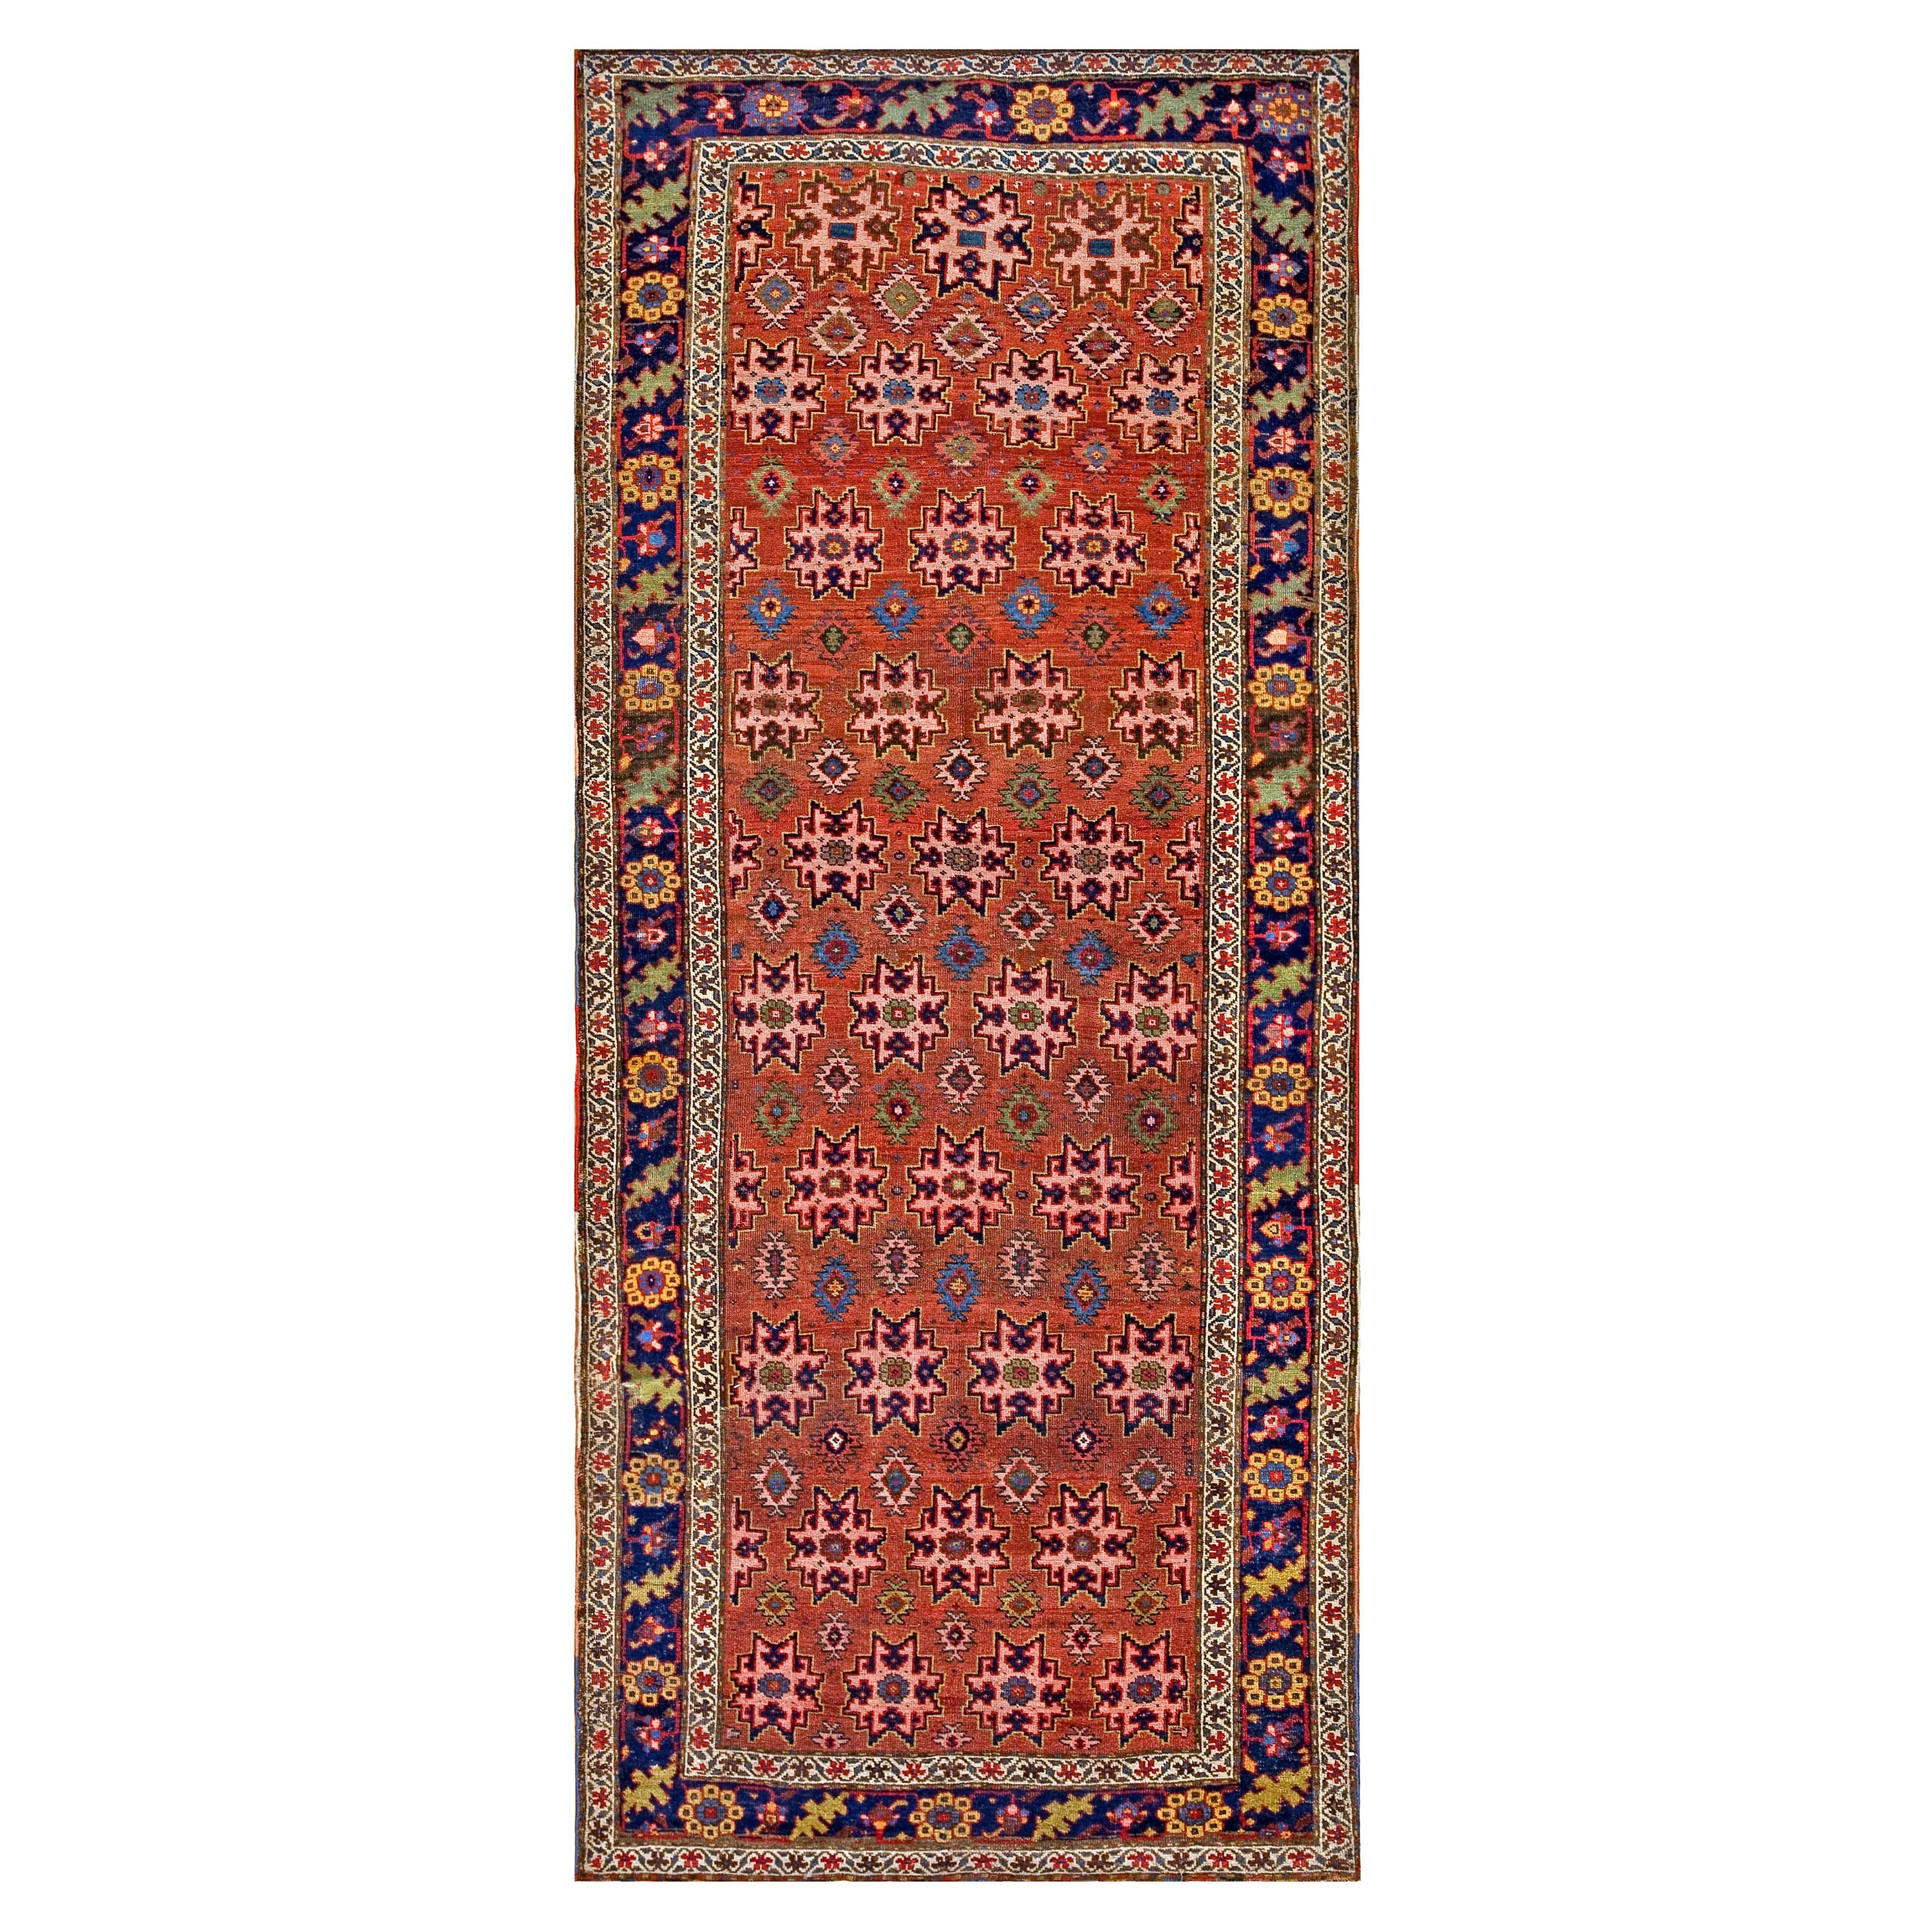 19th Century W. Persian Carpet Bijar Carpet ( 4'6" x 10'6" - 137 x 320 ) For Sale